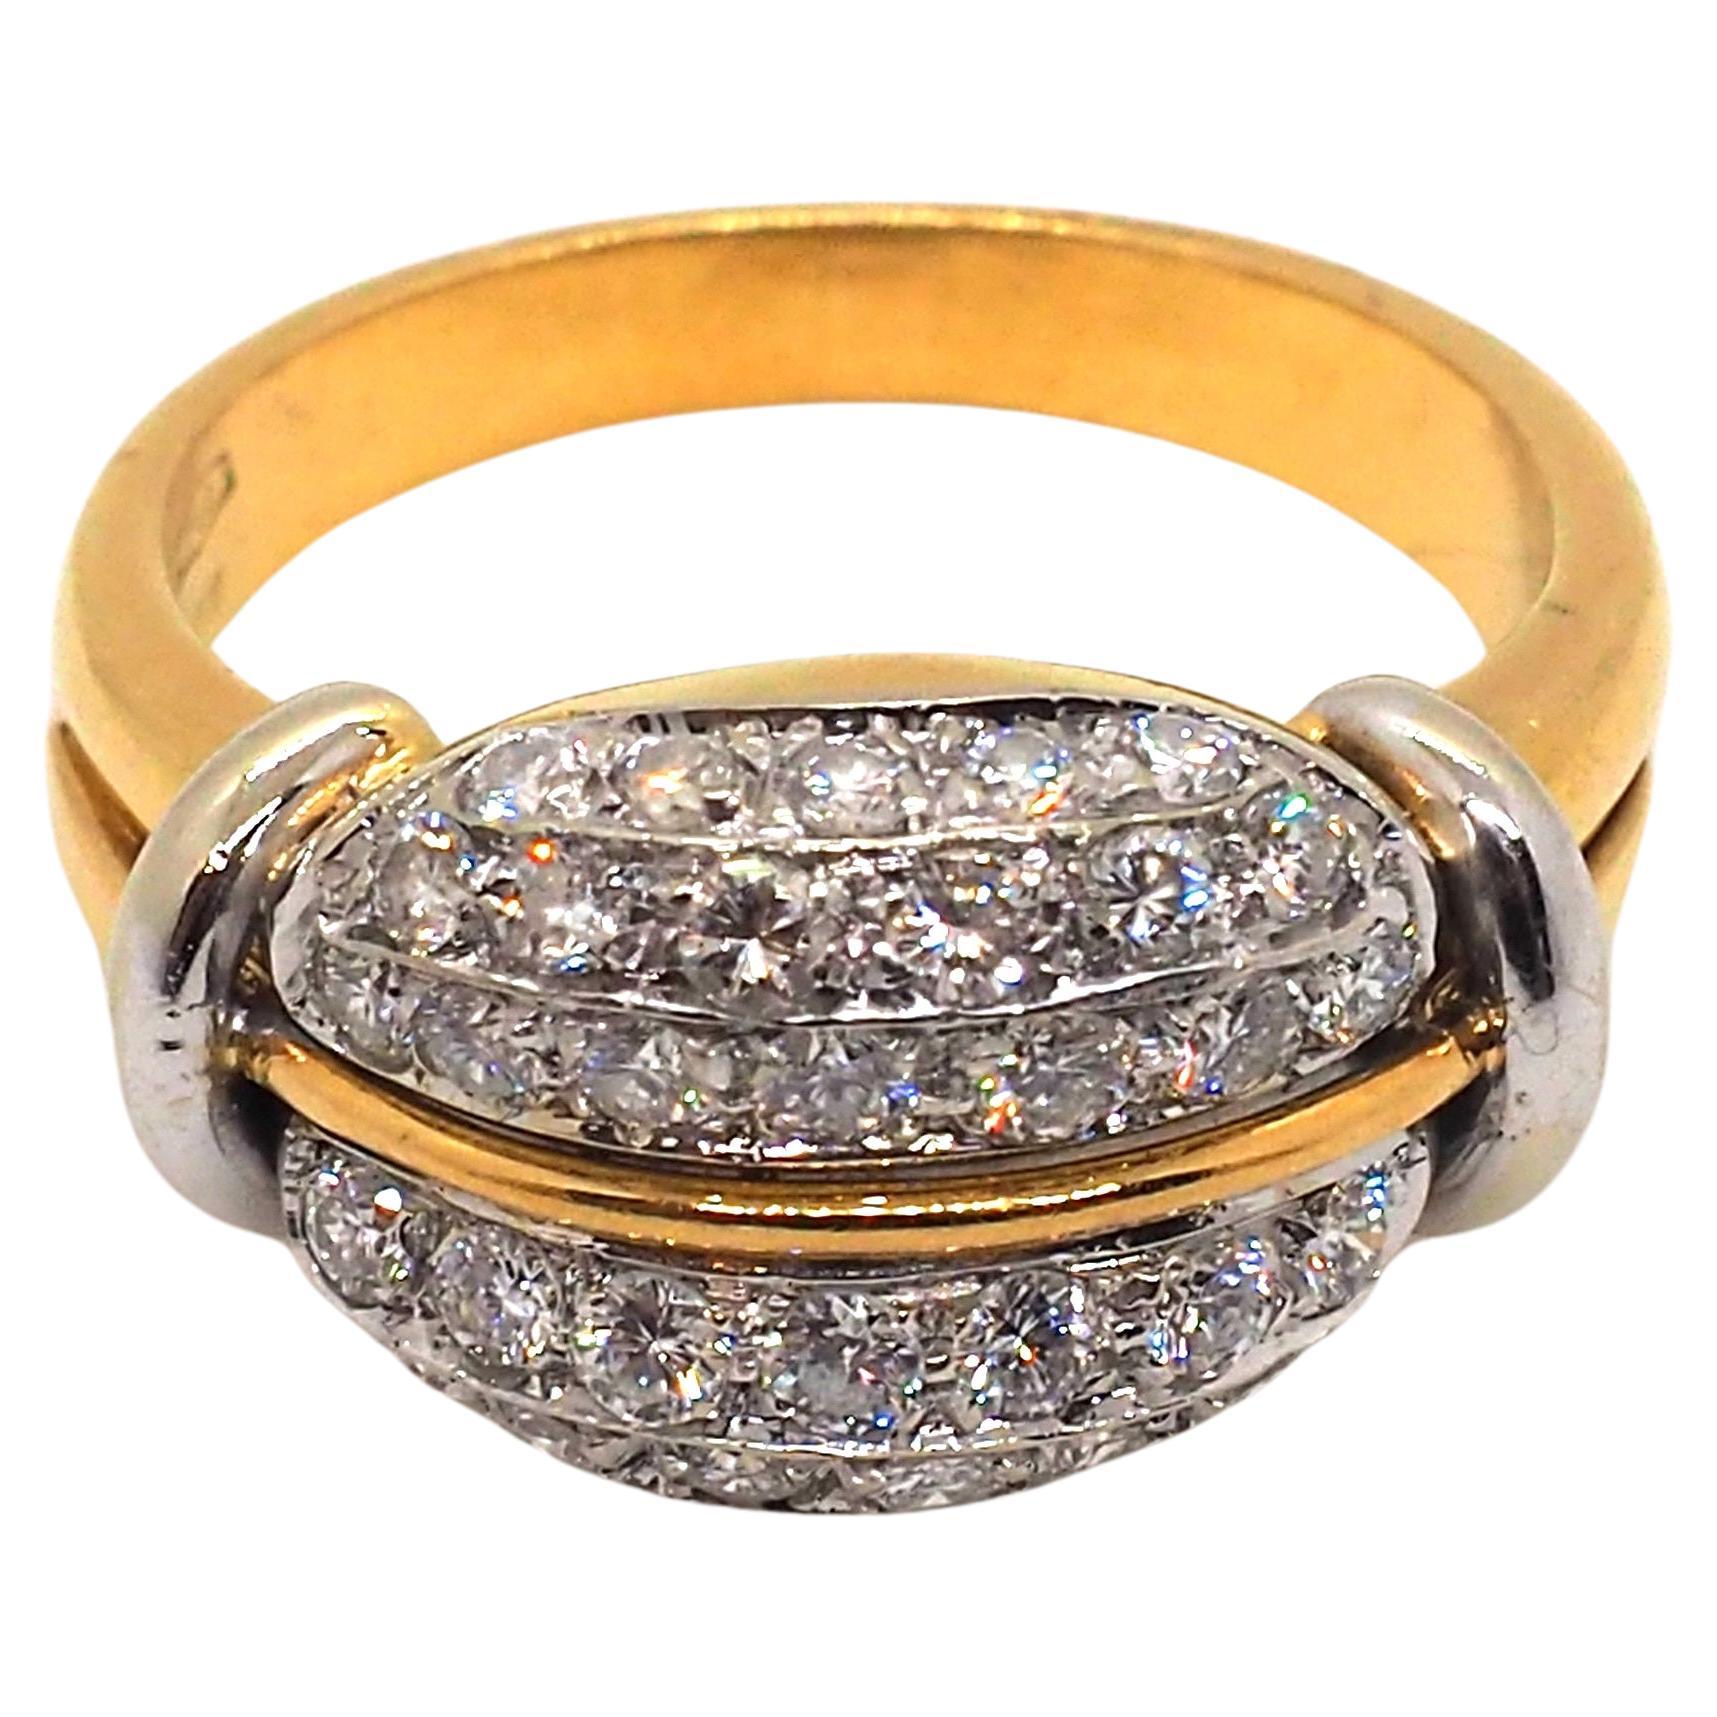 Vintage 18K Yellow and White Gold Diamond Ring